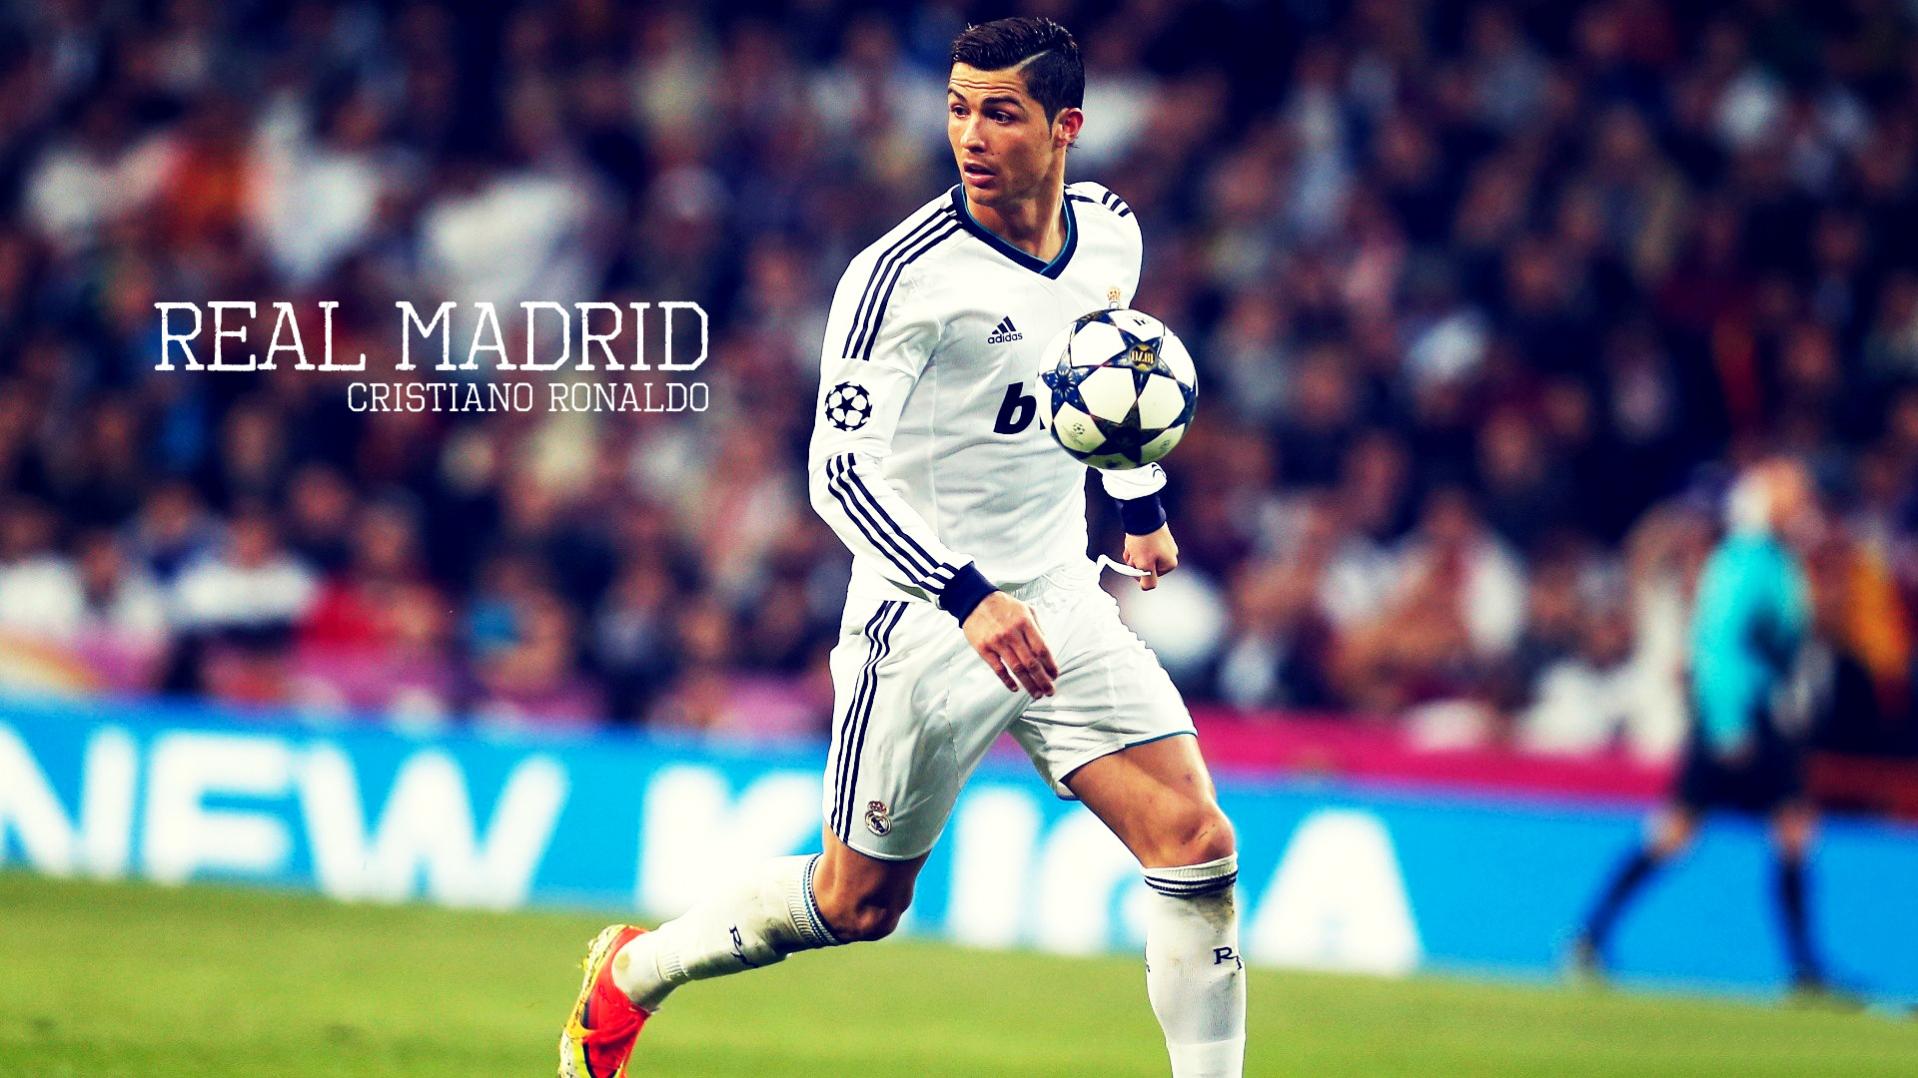 Cristiano Ronaldo Wallpaper for Desktop. V45. Cristiano Ronaldo